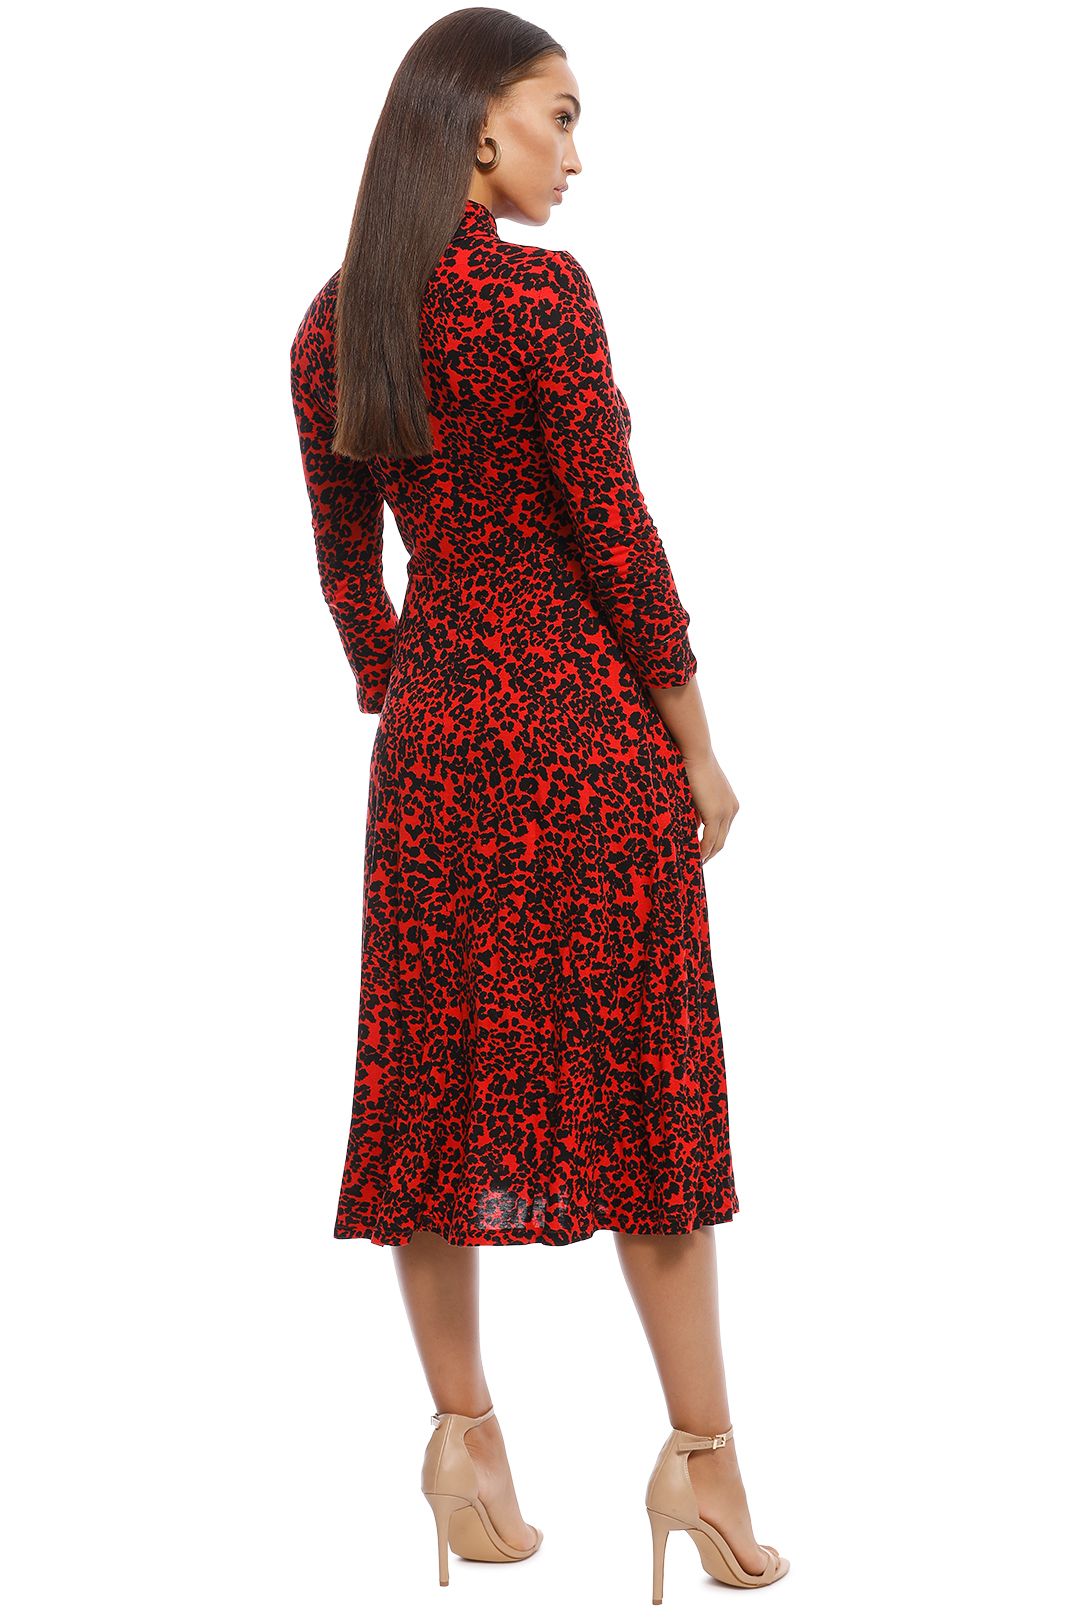 MNG - Moncho Animal Print Dress - Red - Back